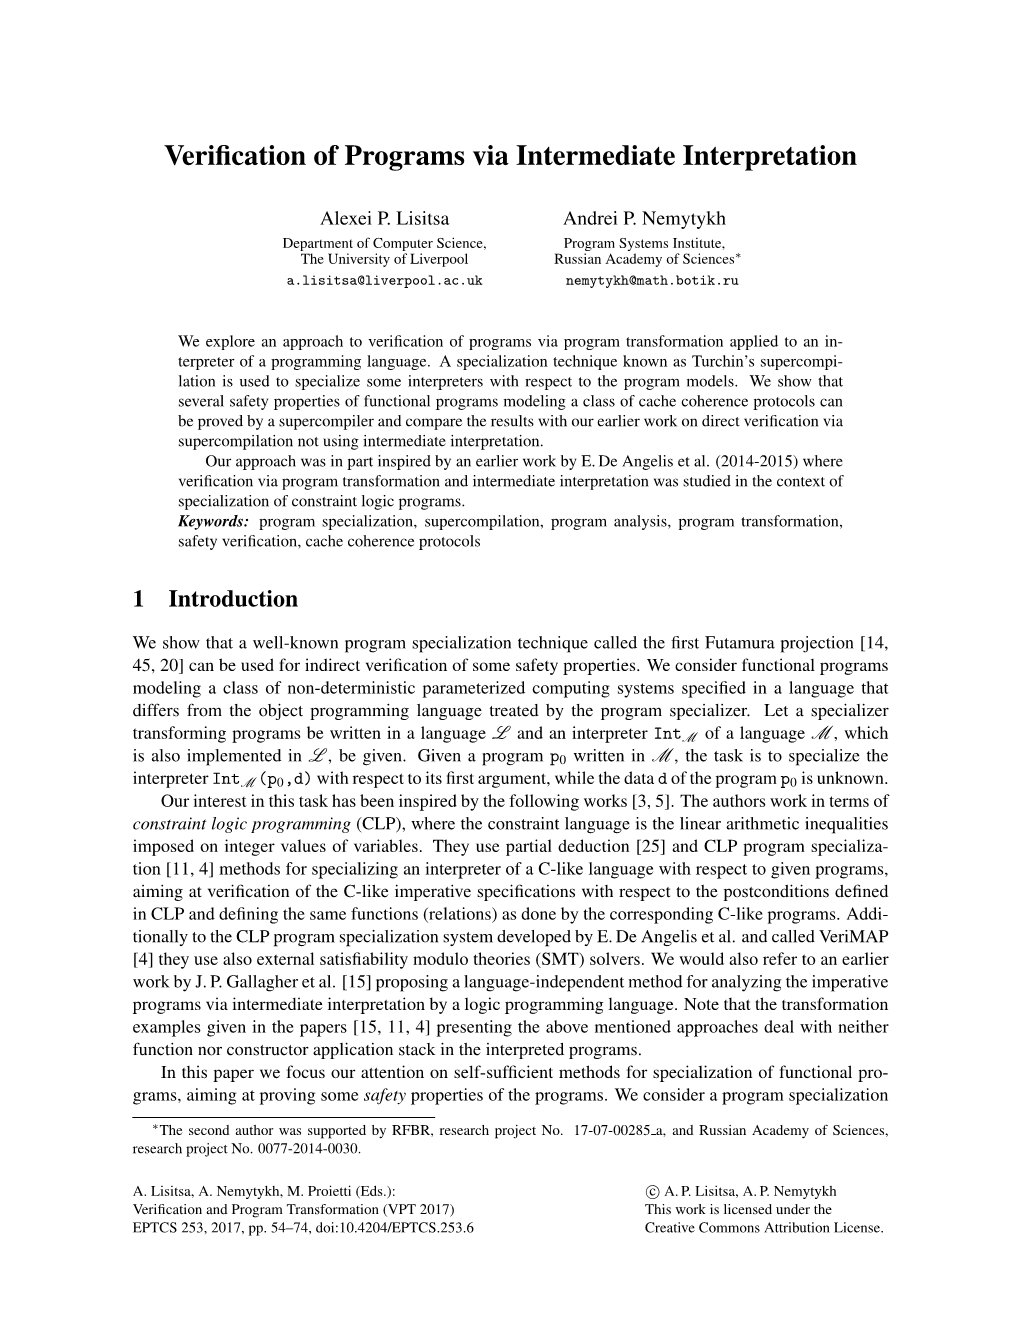 Verification of Programs Via Intermediate Interpretation